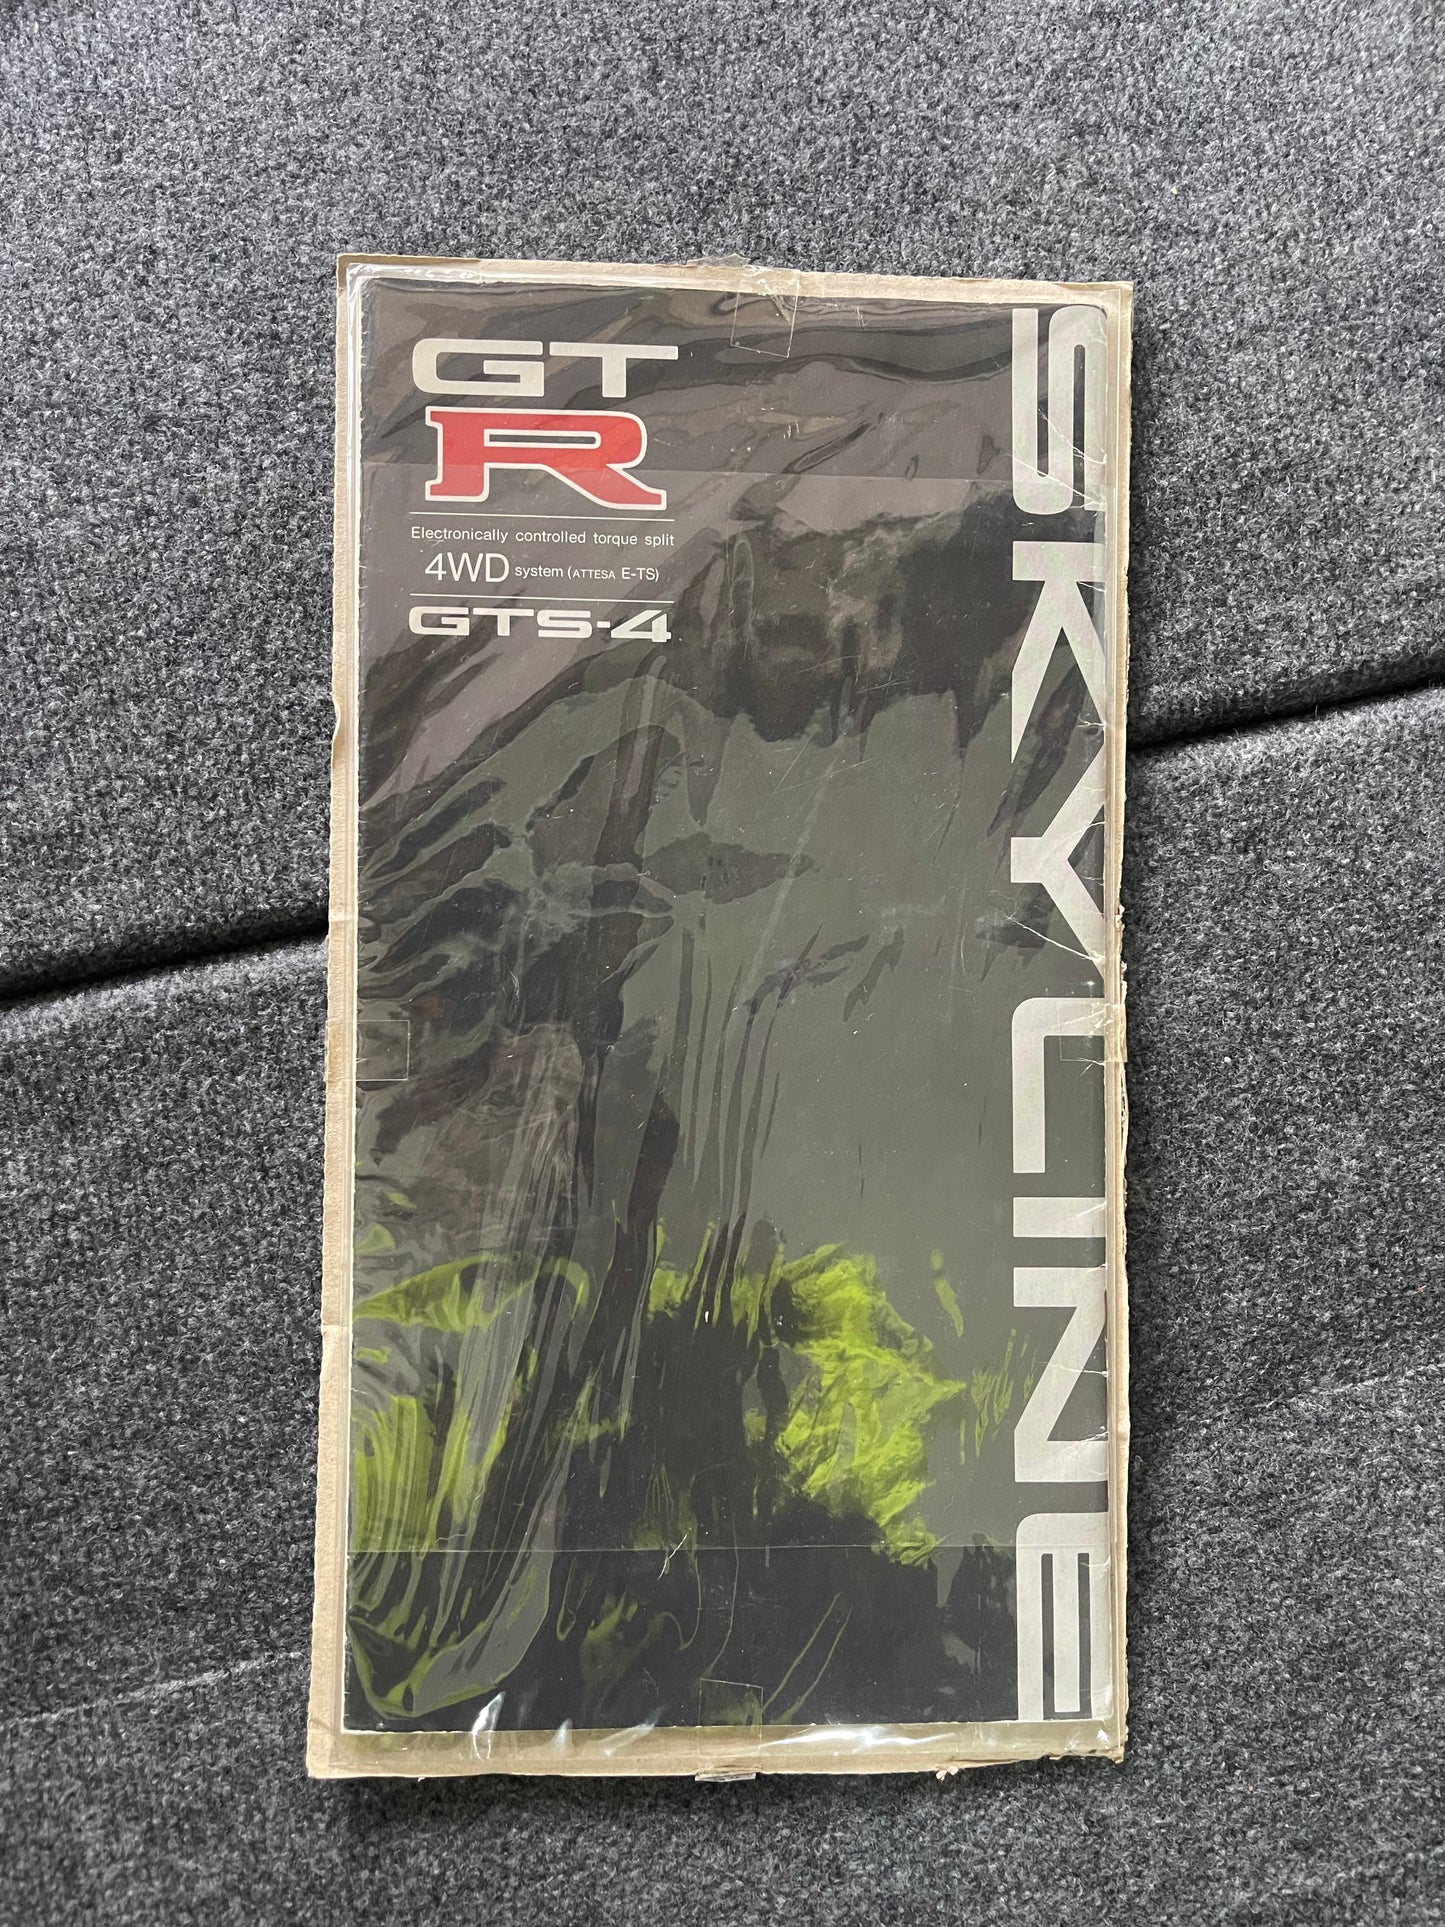 Rare R32 GTR GTS4 Dealer Brochure